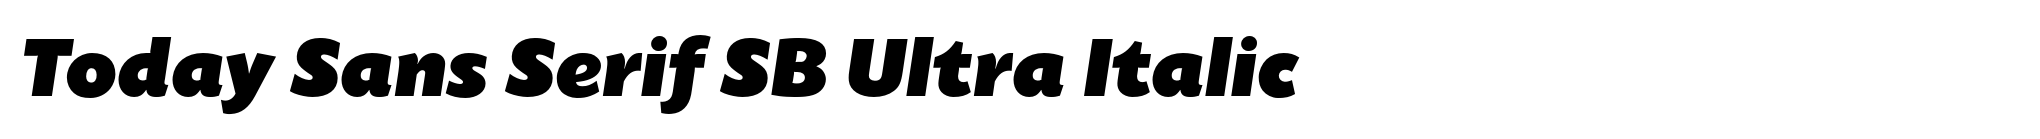 Today Sans Serif SB Ultra Italic image